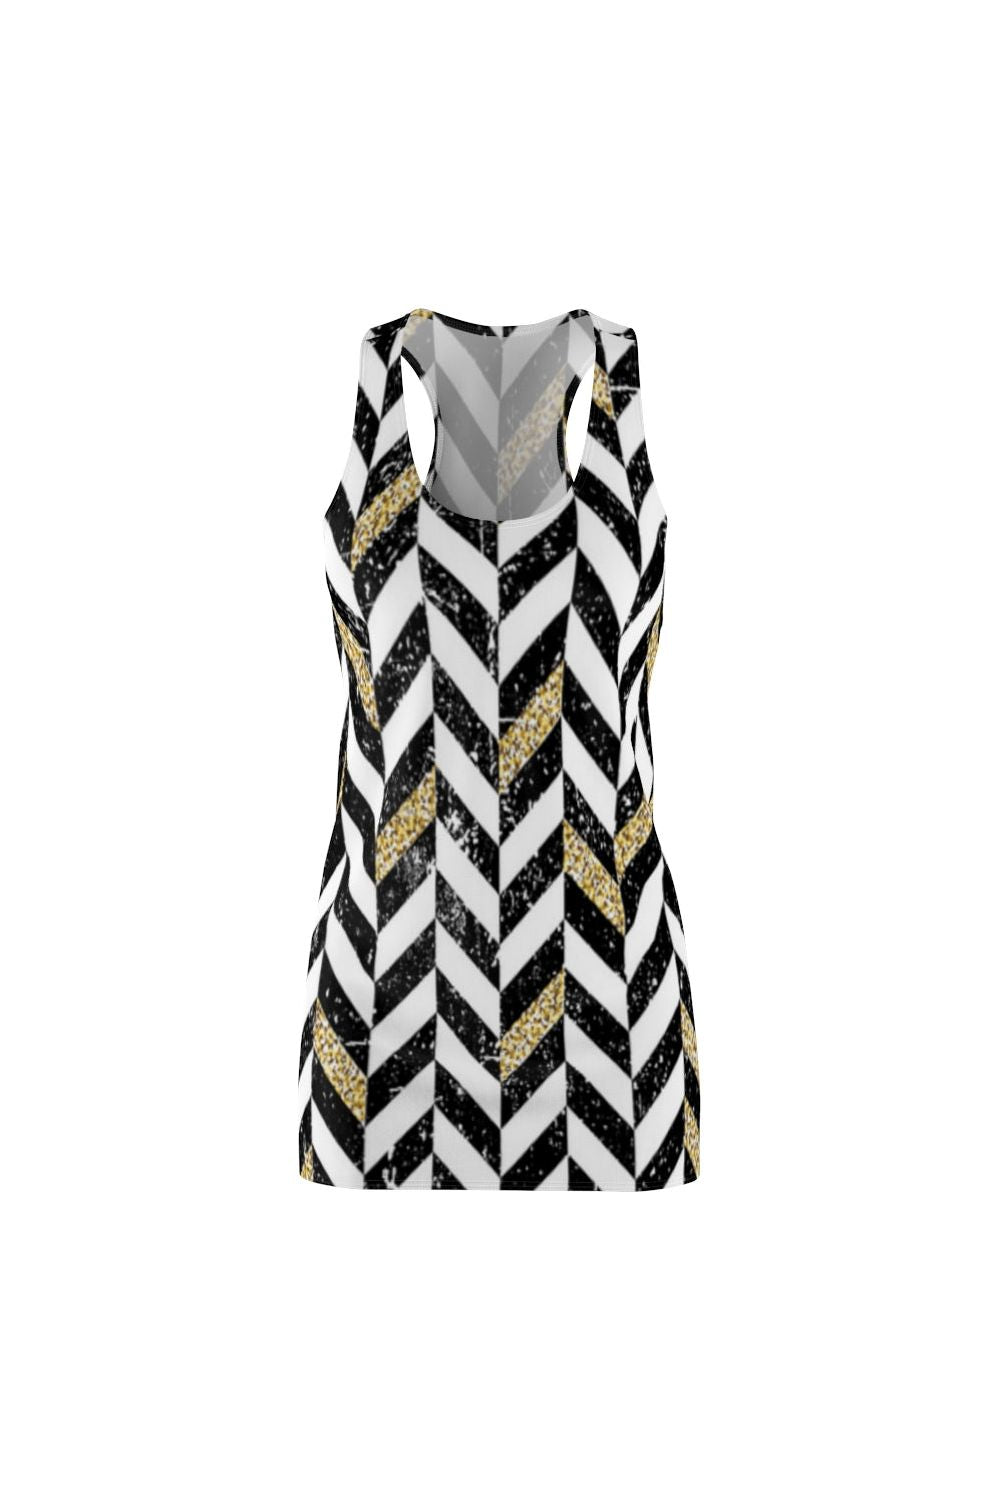 Women's Black, White and Gold Racerback Dress - NicholesGifts.online